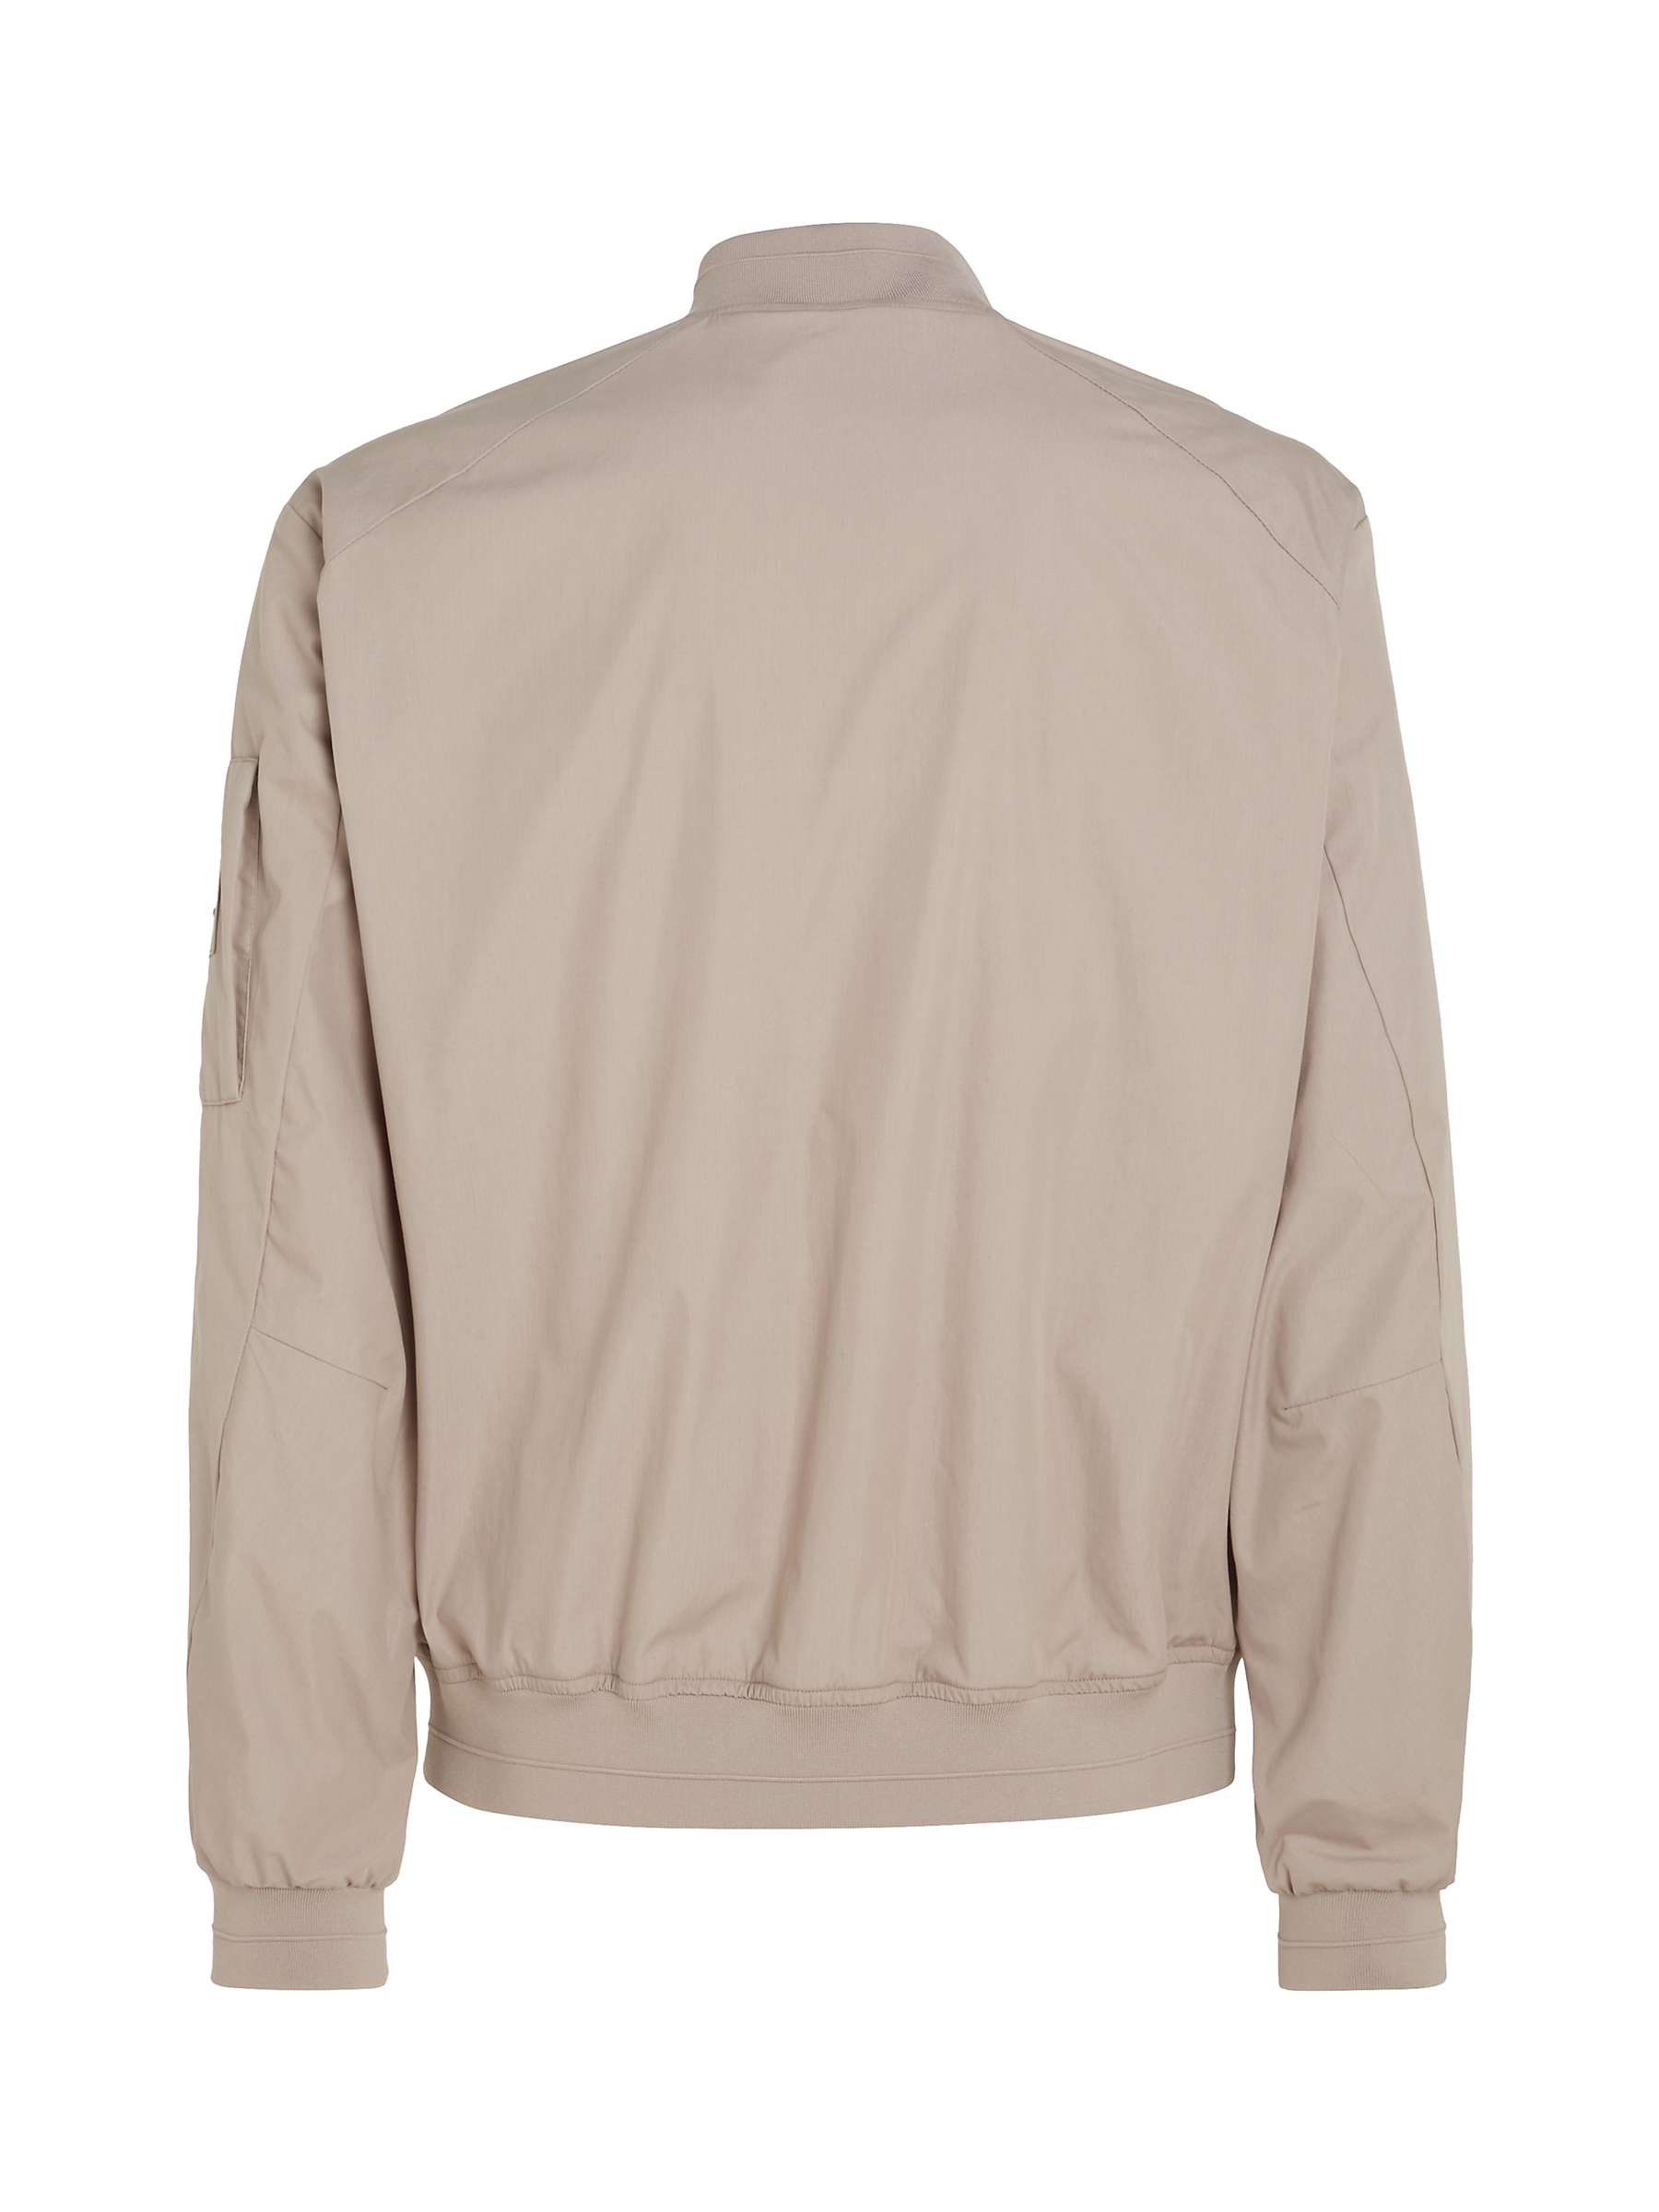 Buy Calvin Klein Organic Cotton Blend Bomber Jacket, Atmosphere Online at johnlewis.com